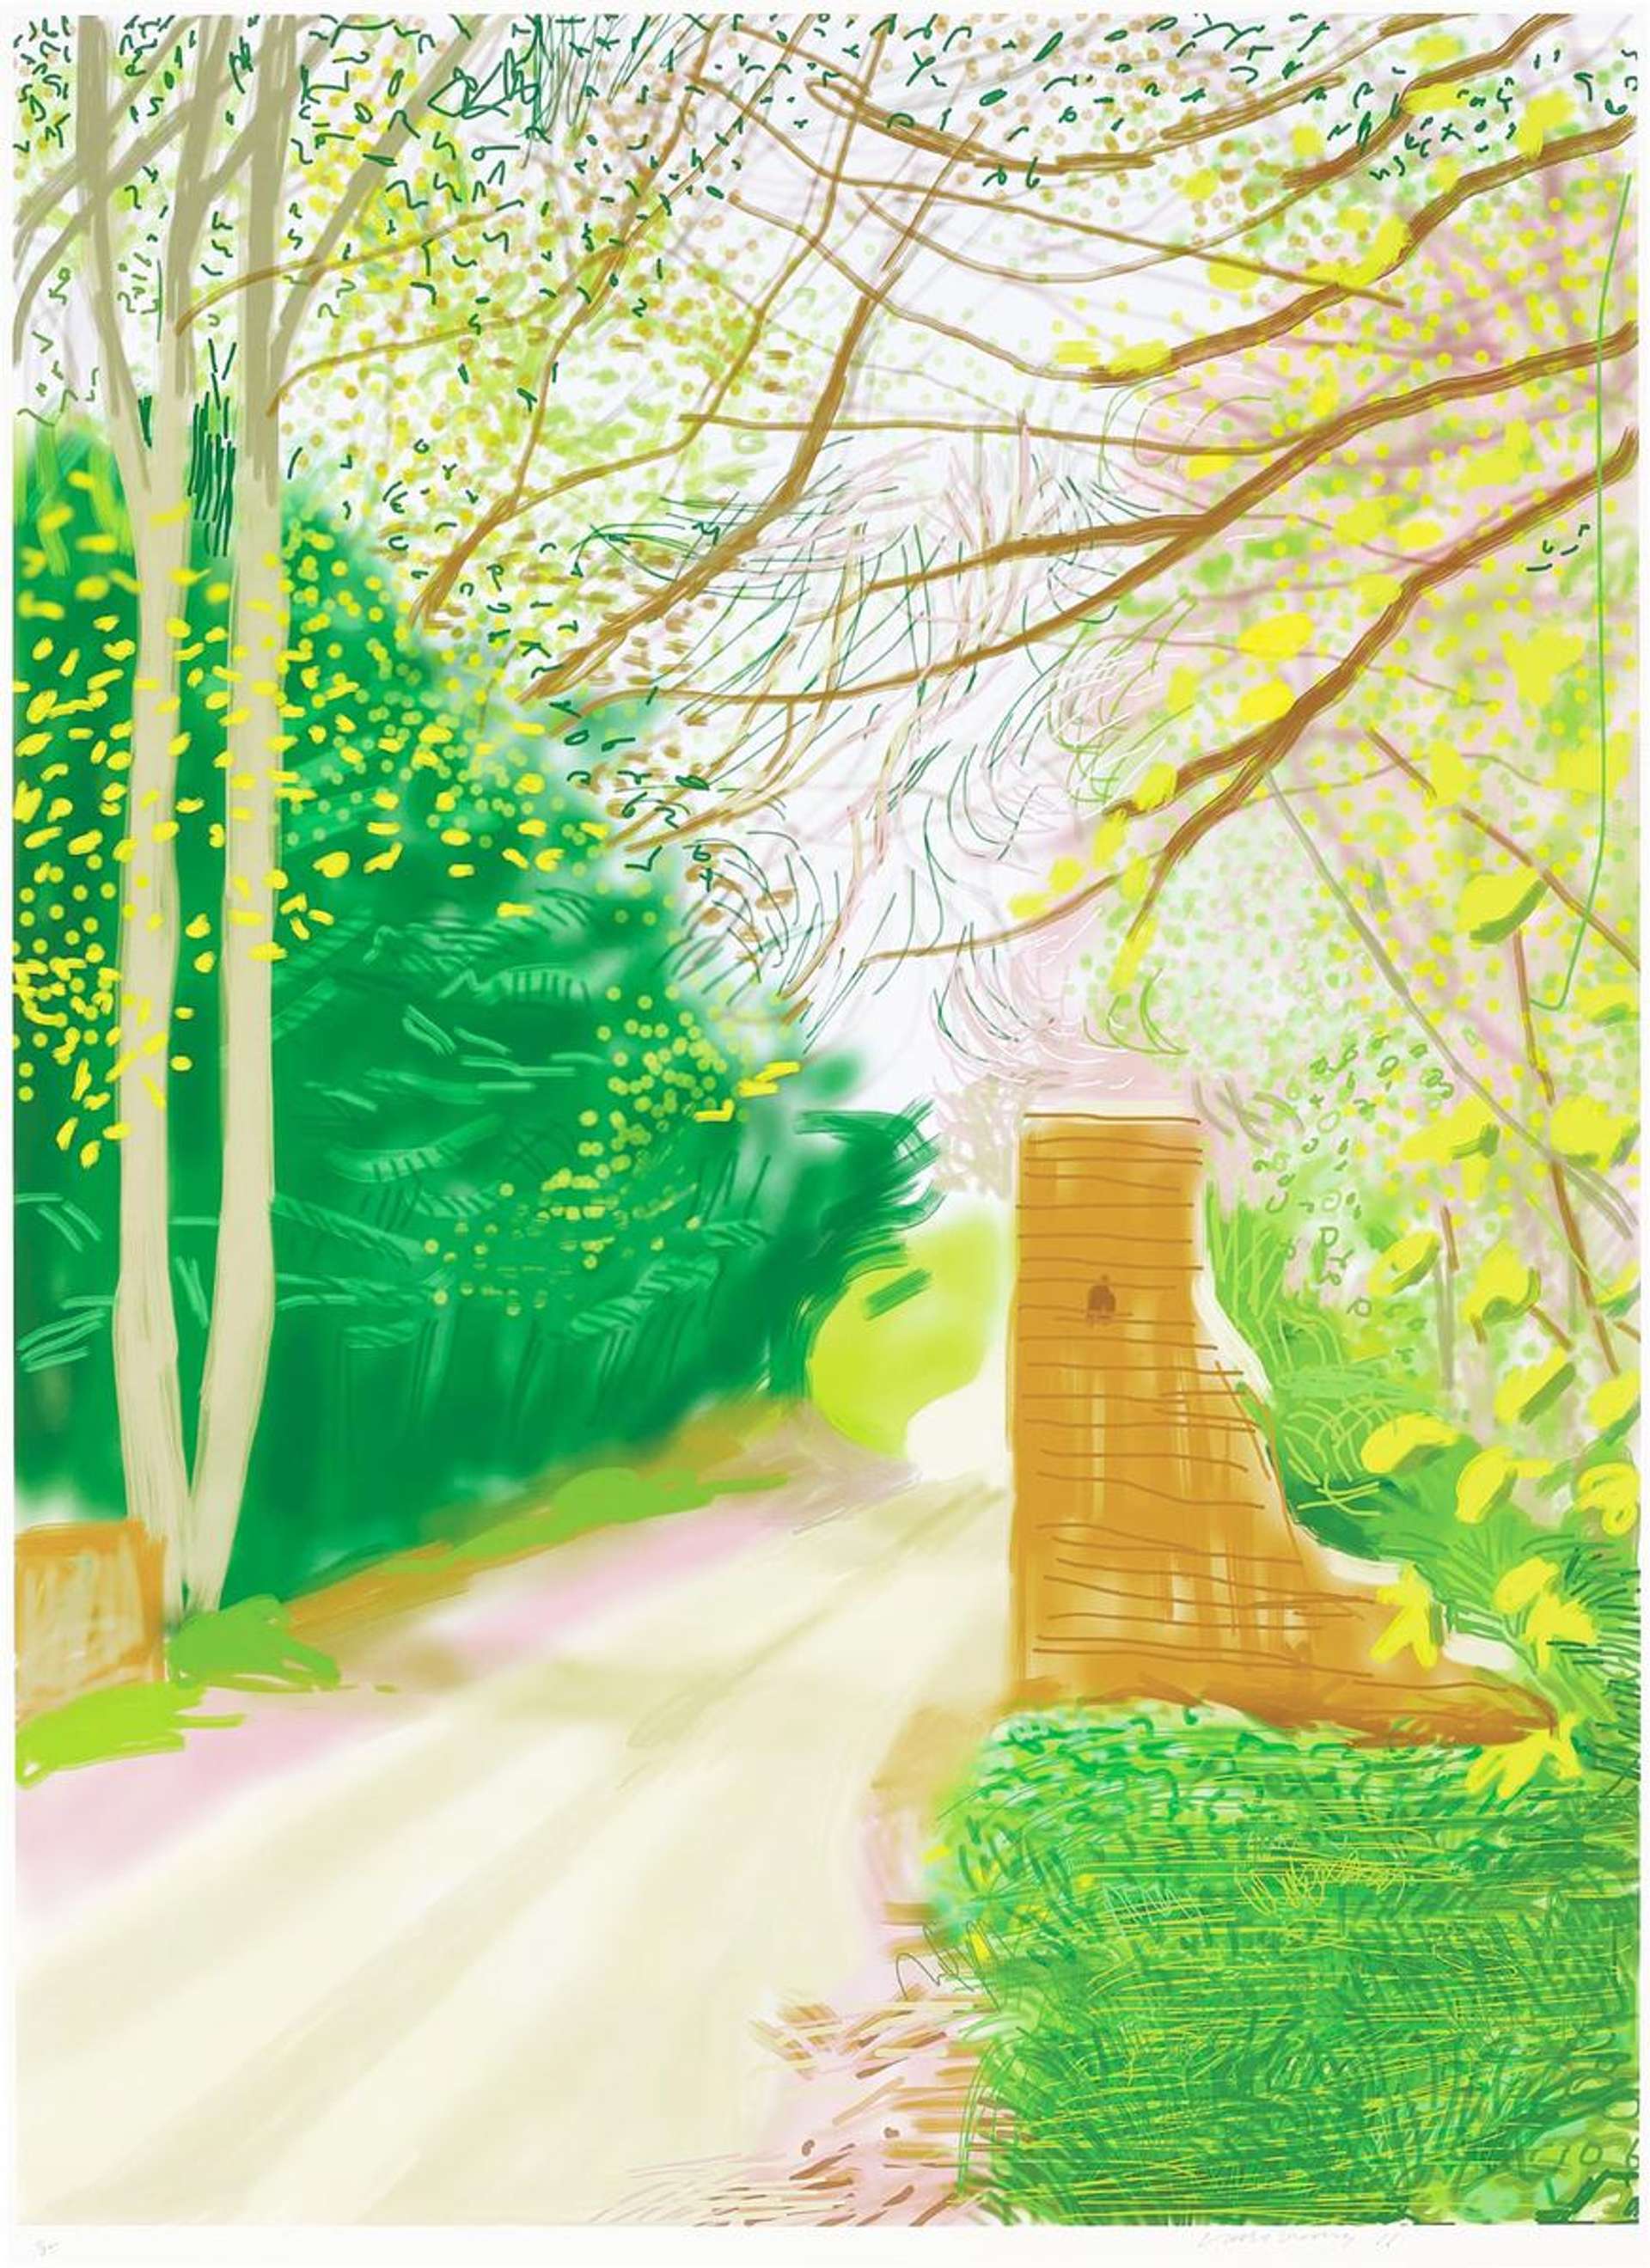 David Hockney: The Arrival Of Spring In Woldgate East Yorkshire 17th April 2011 - Signed Print